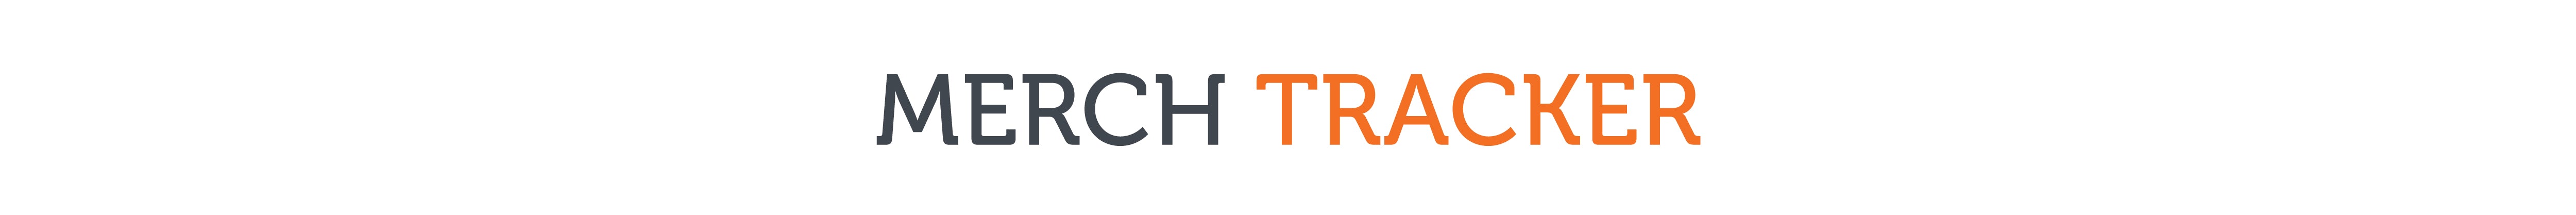 Merch Tracker Logo